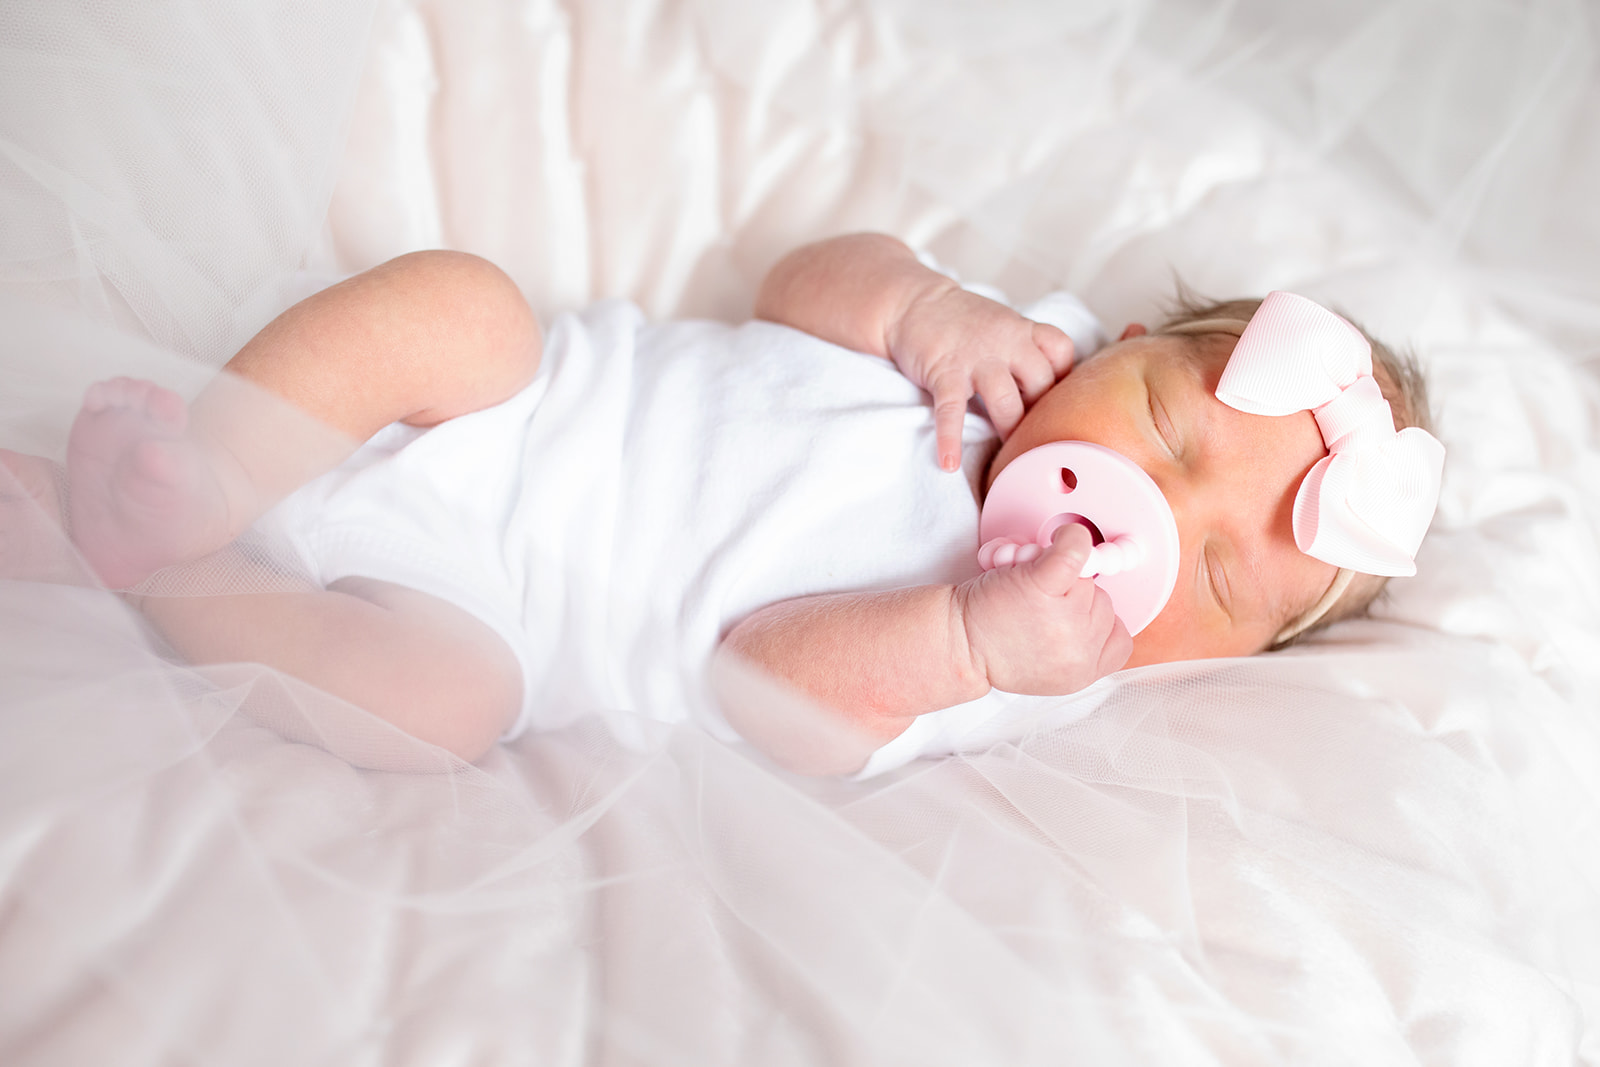 Baby Merritts Lifestyle Newborn Photos - Image Property of www.j-dphoto.com